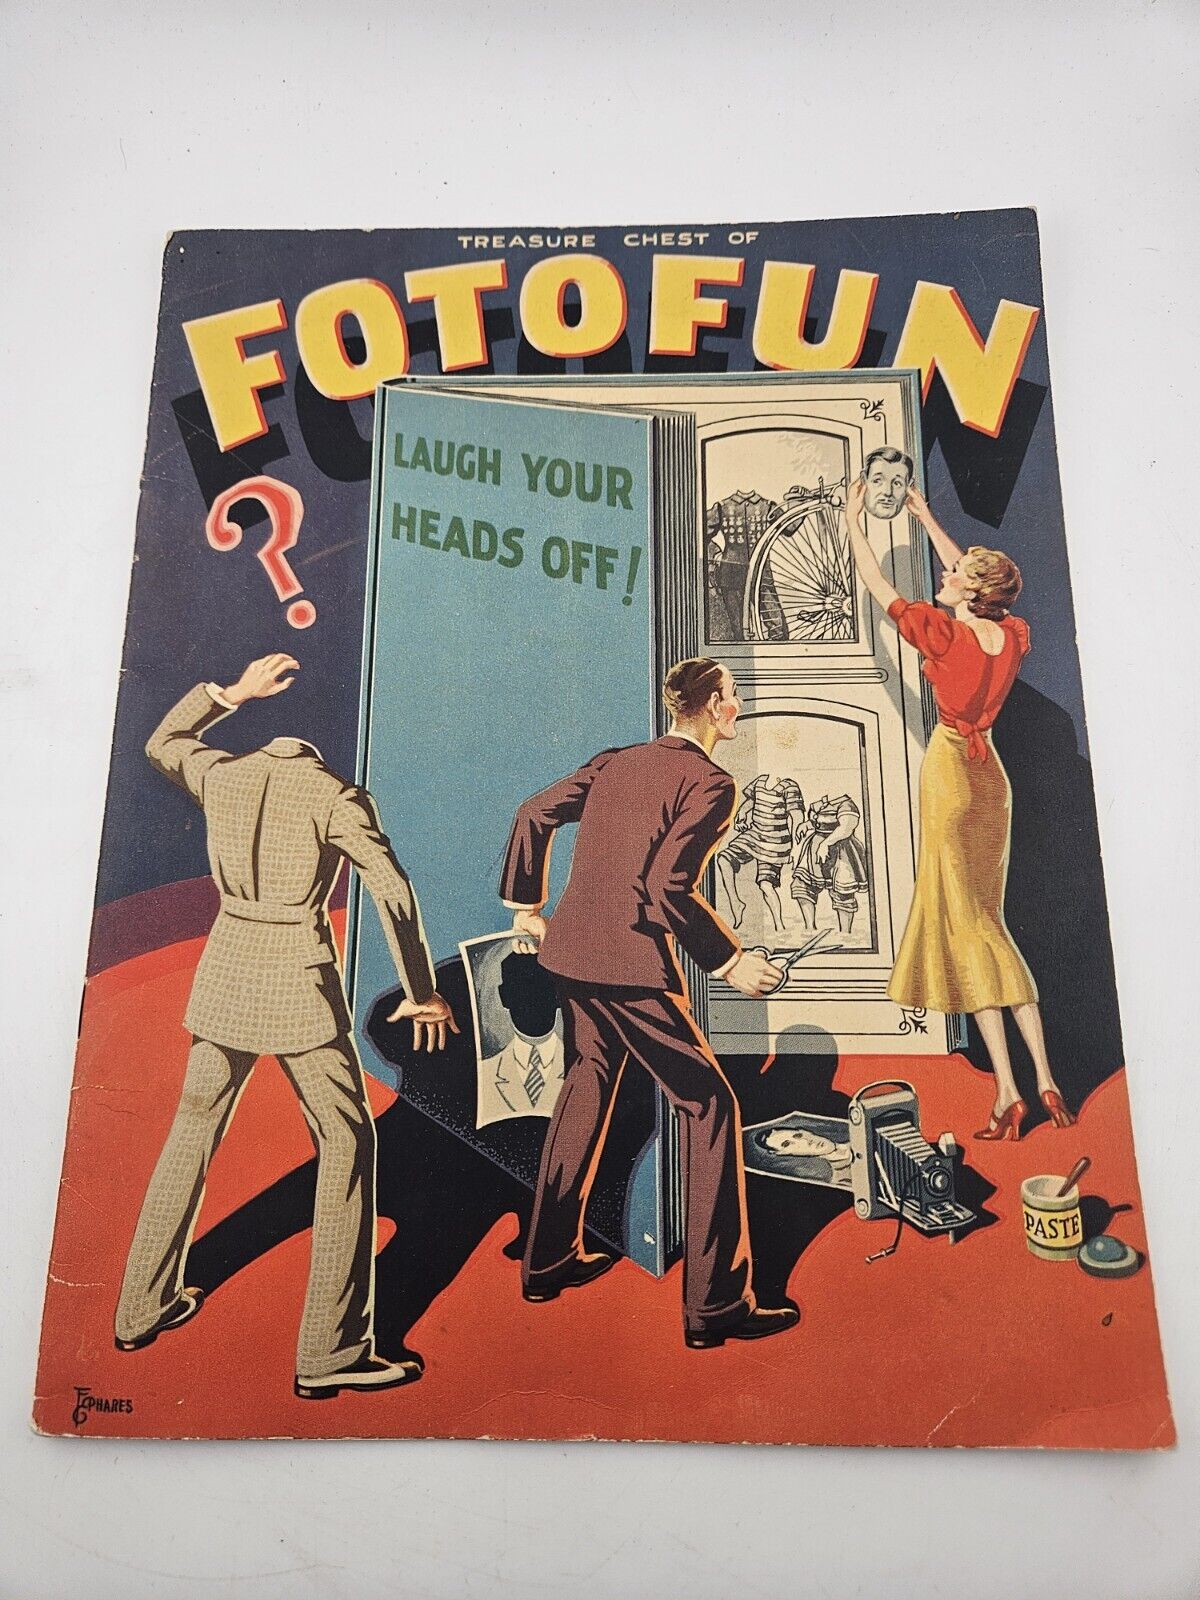 Treasure Chest of Foto Fun 1934 FG Phares Wm. J. Glassmacher Vintage  